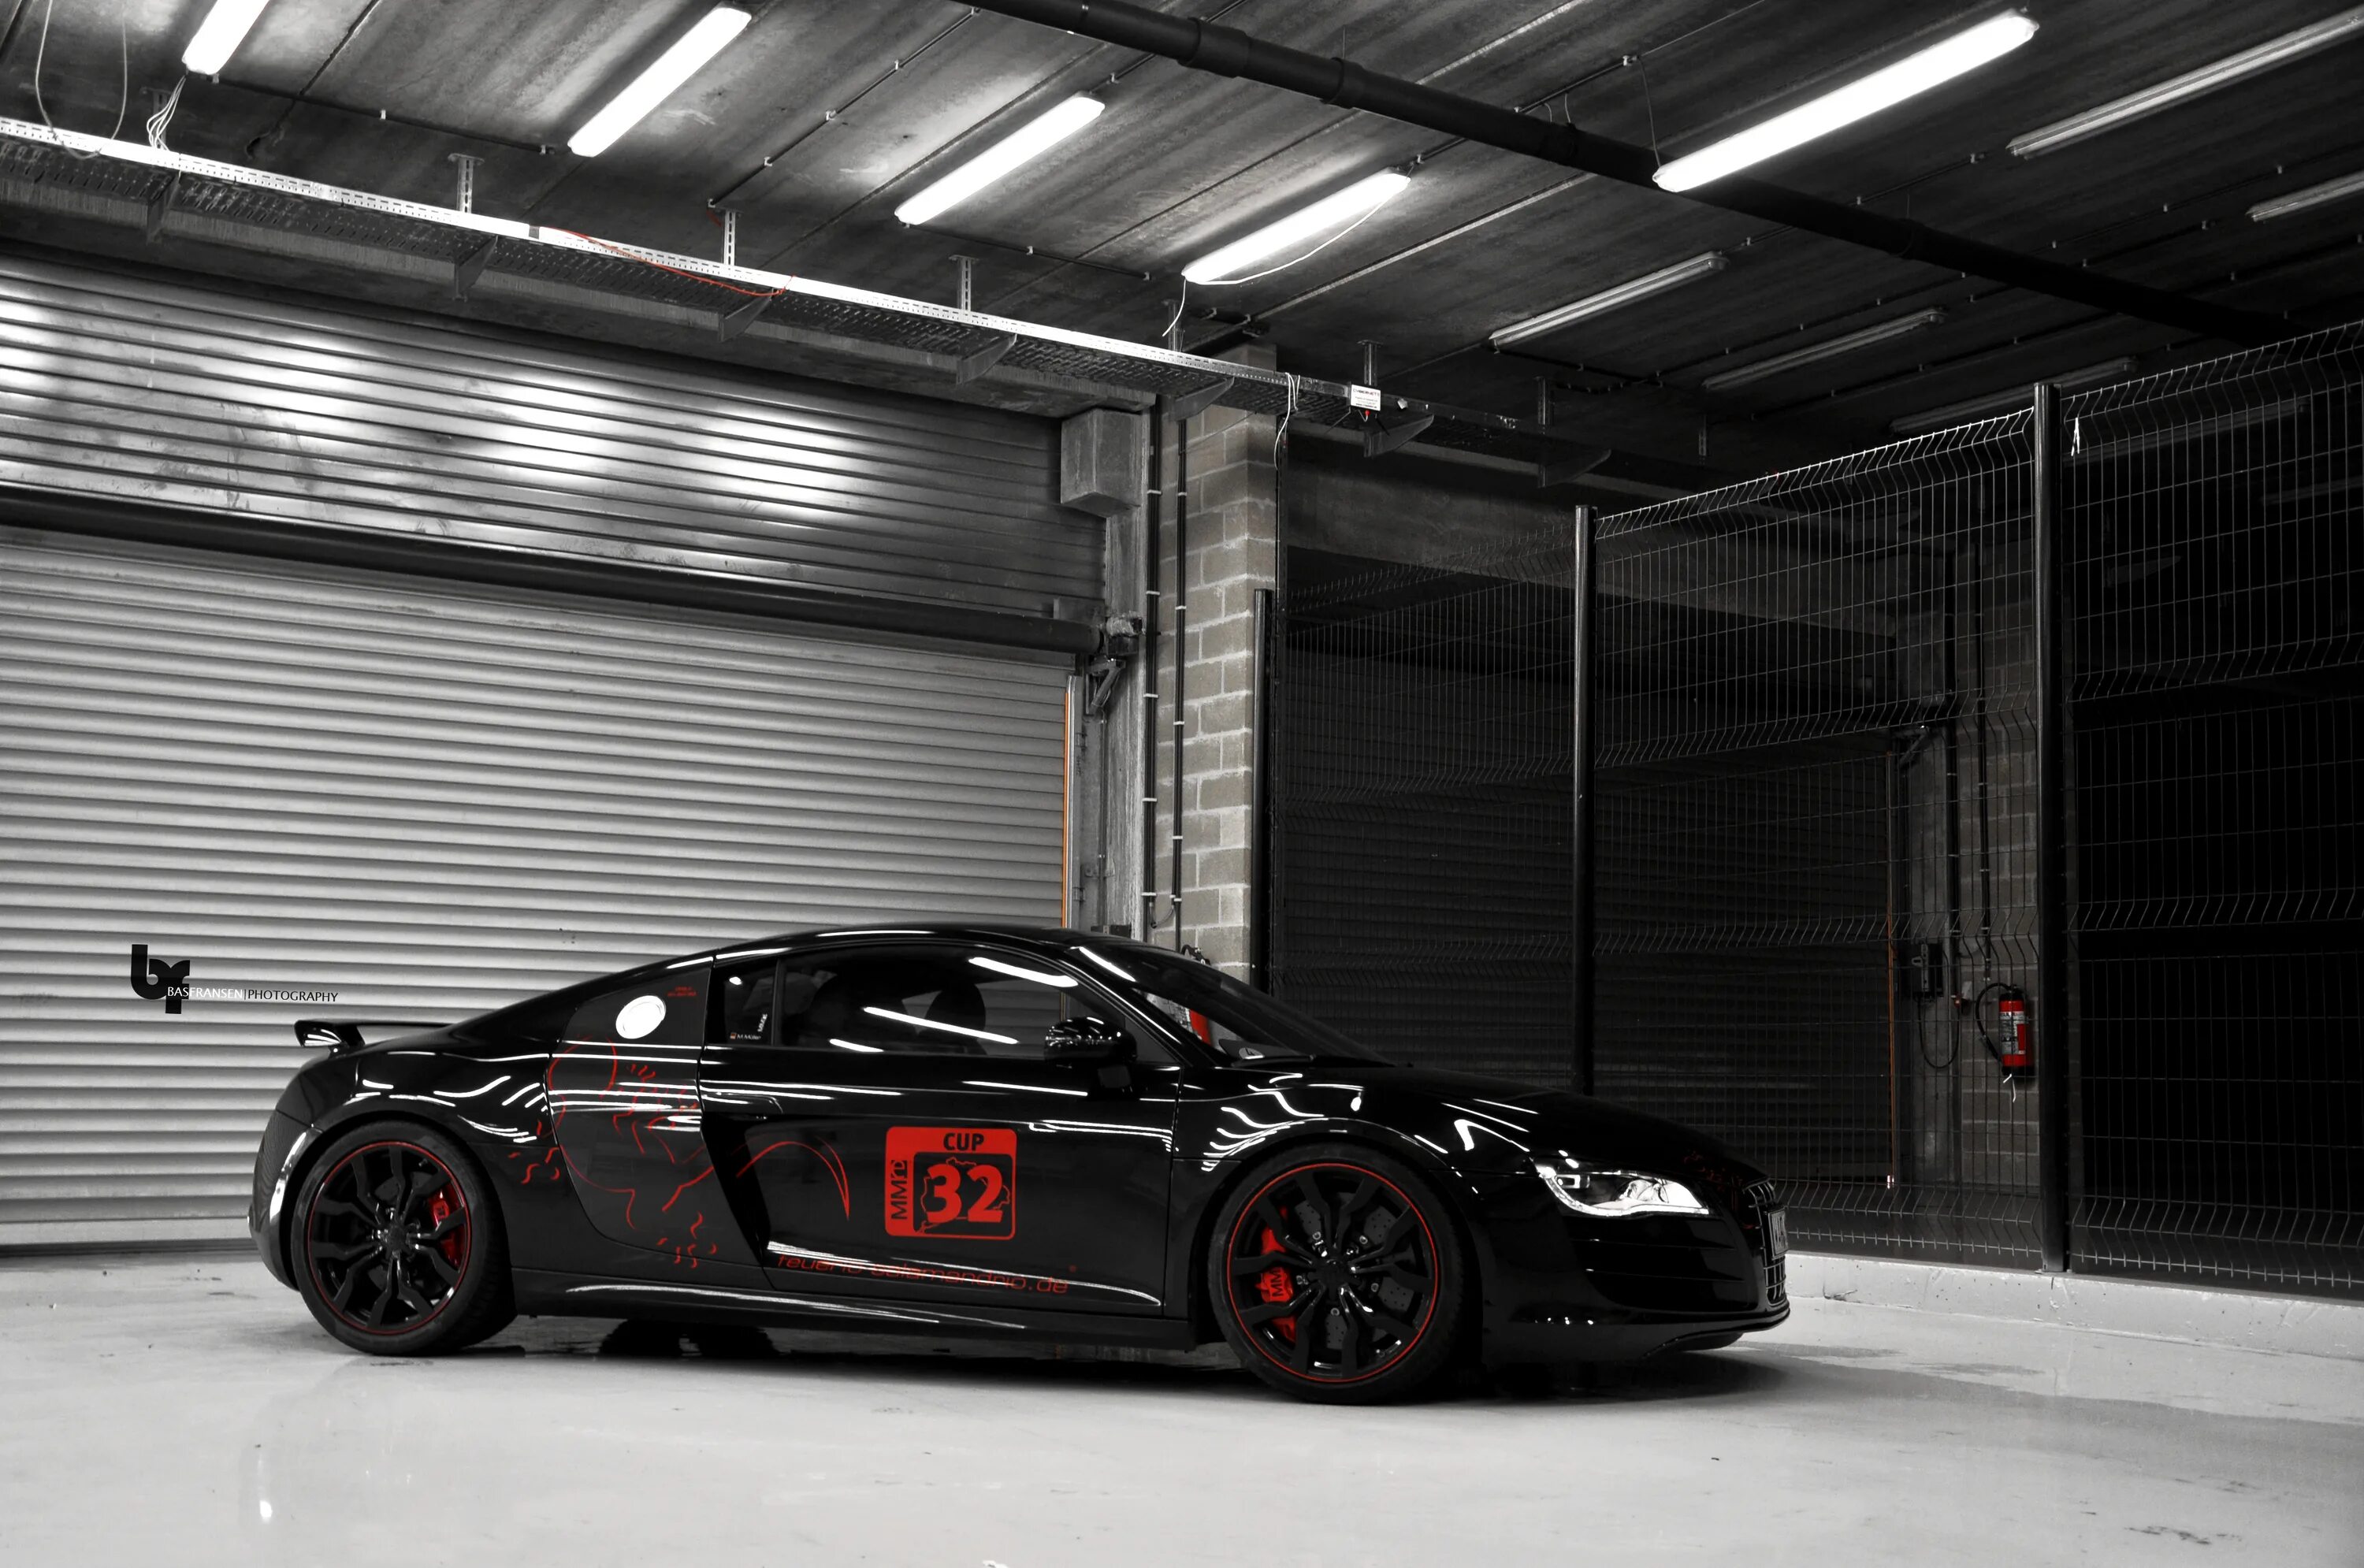 Audi r8 Sport Black. Audi r8 Black Tuning. Audi r8 Sport Tuning. Sport car Audi r8 Black. Май гараж тюнинг